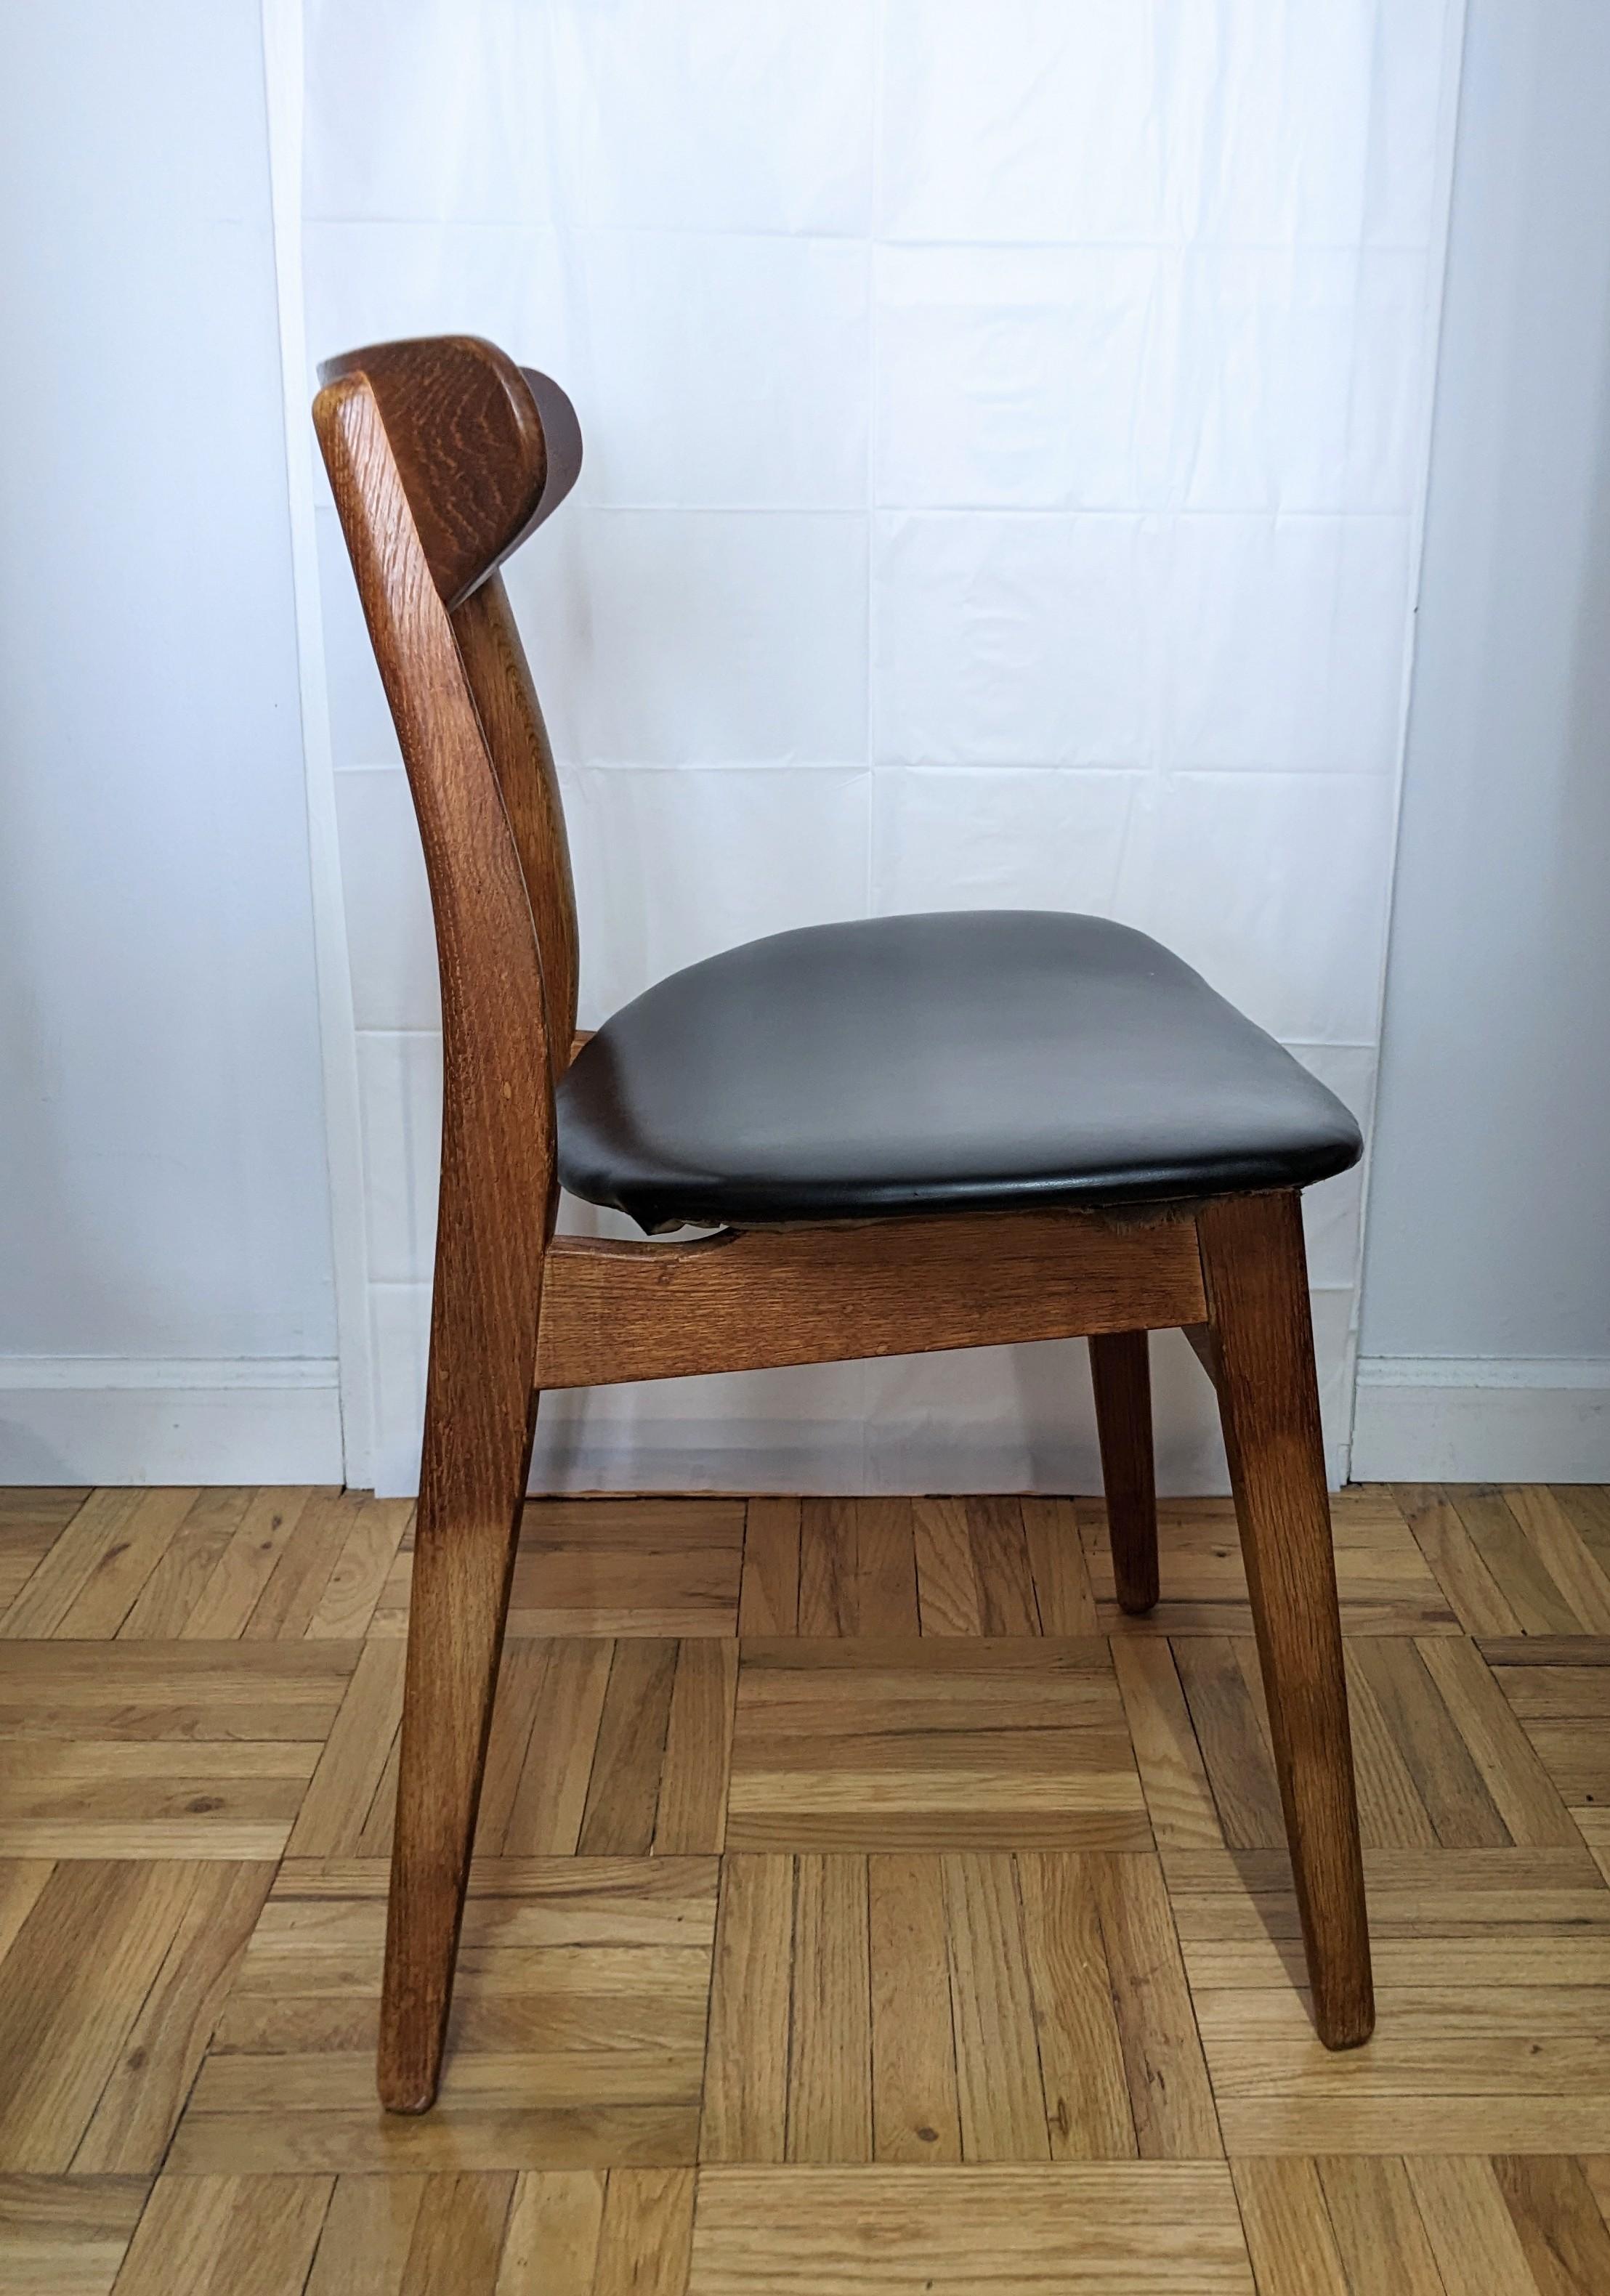 Hans Wegner CH30 Chair with Original Upholstery 1